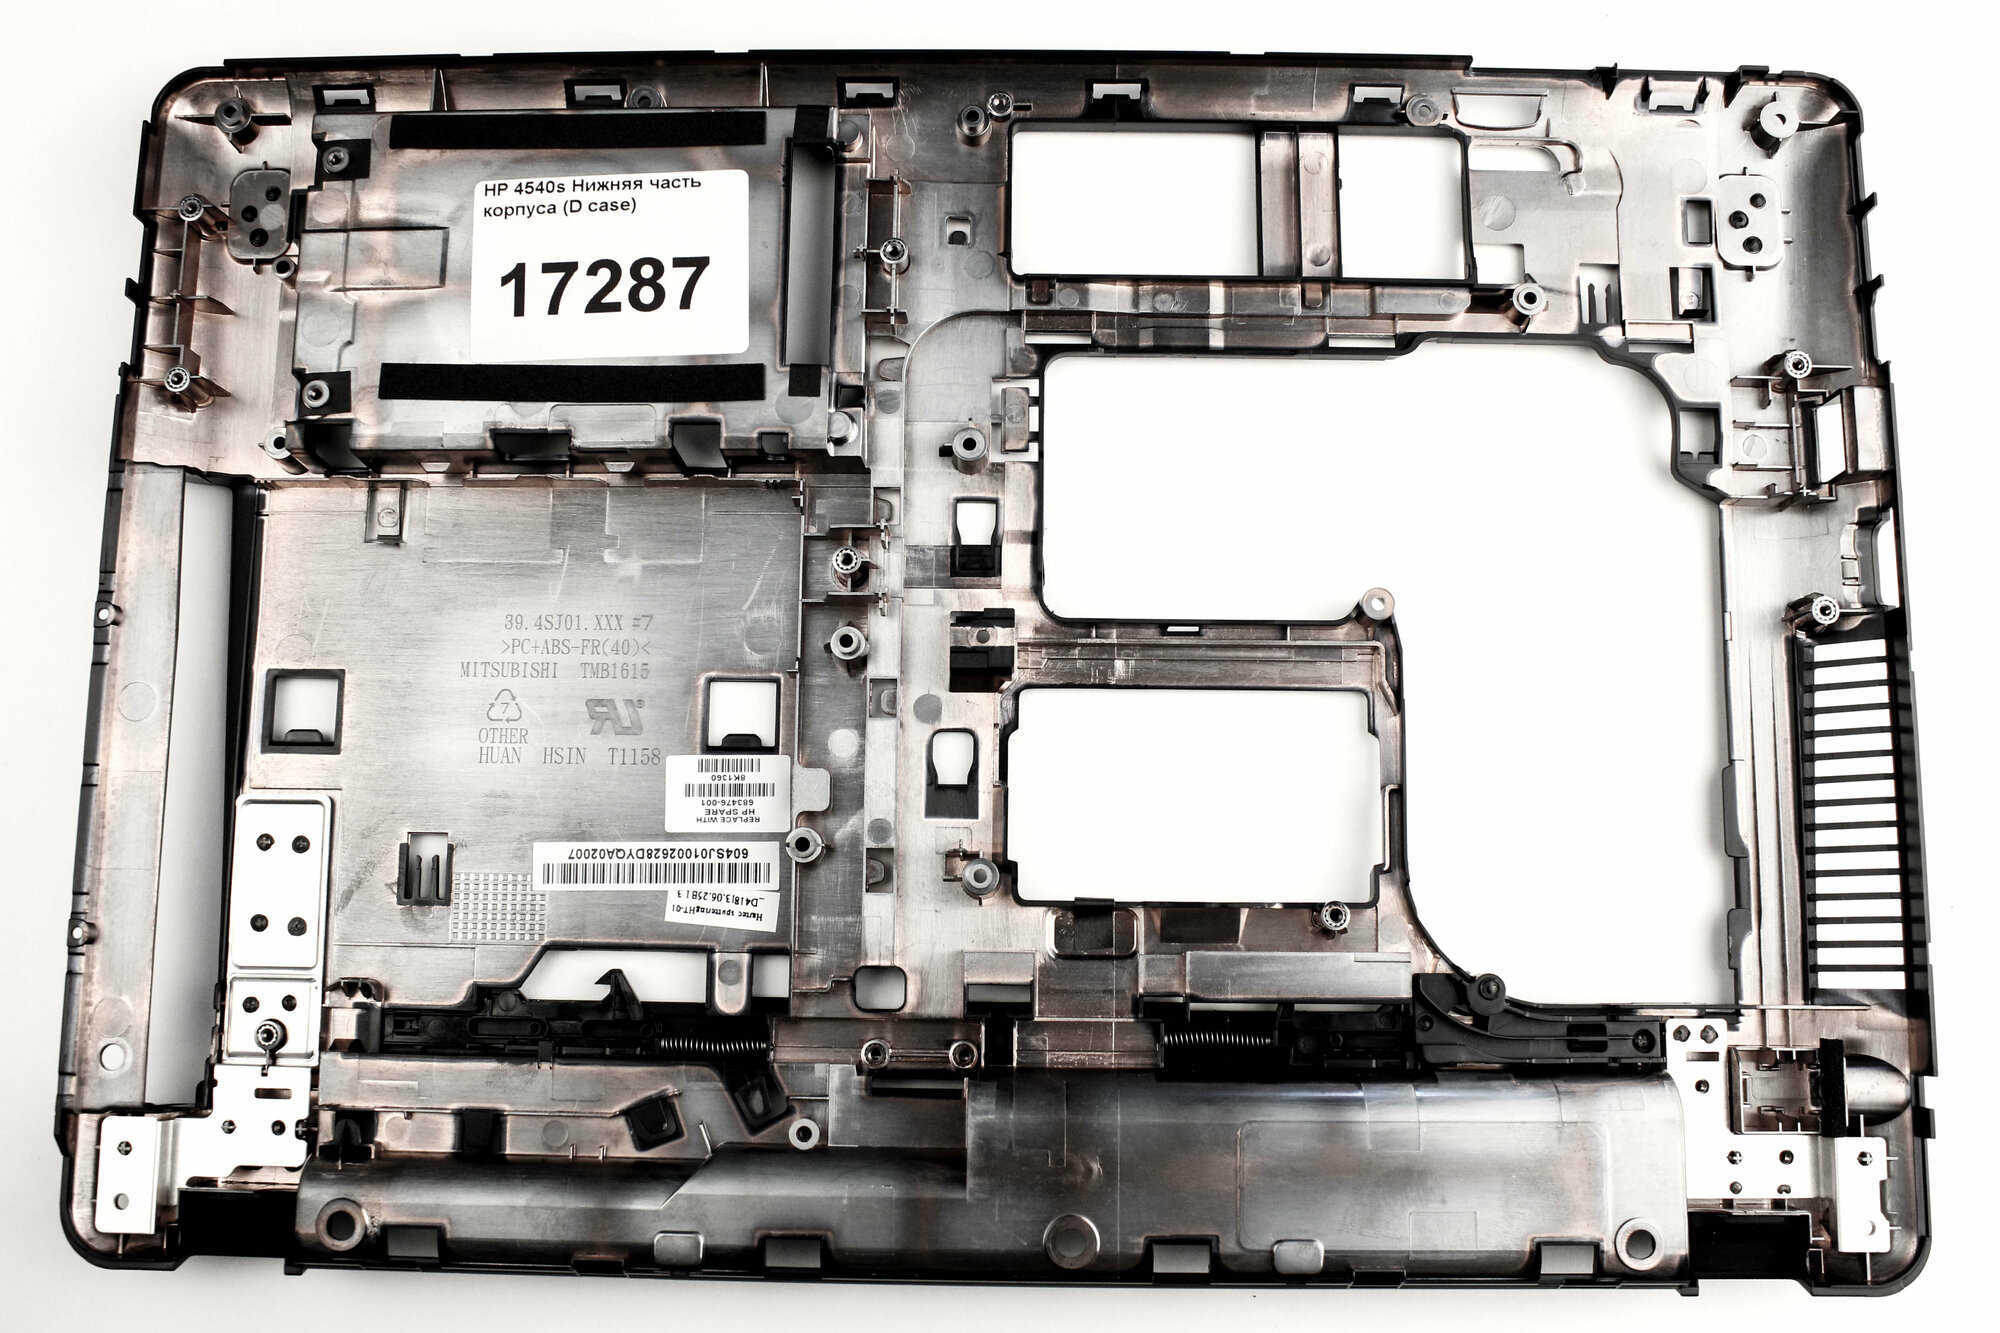 HP 4540s Нижняя часть корпуса (D case)